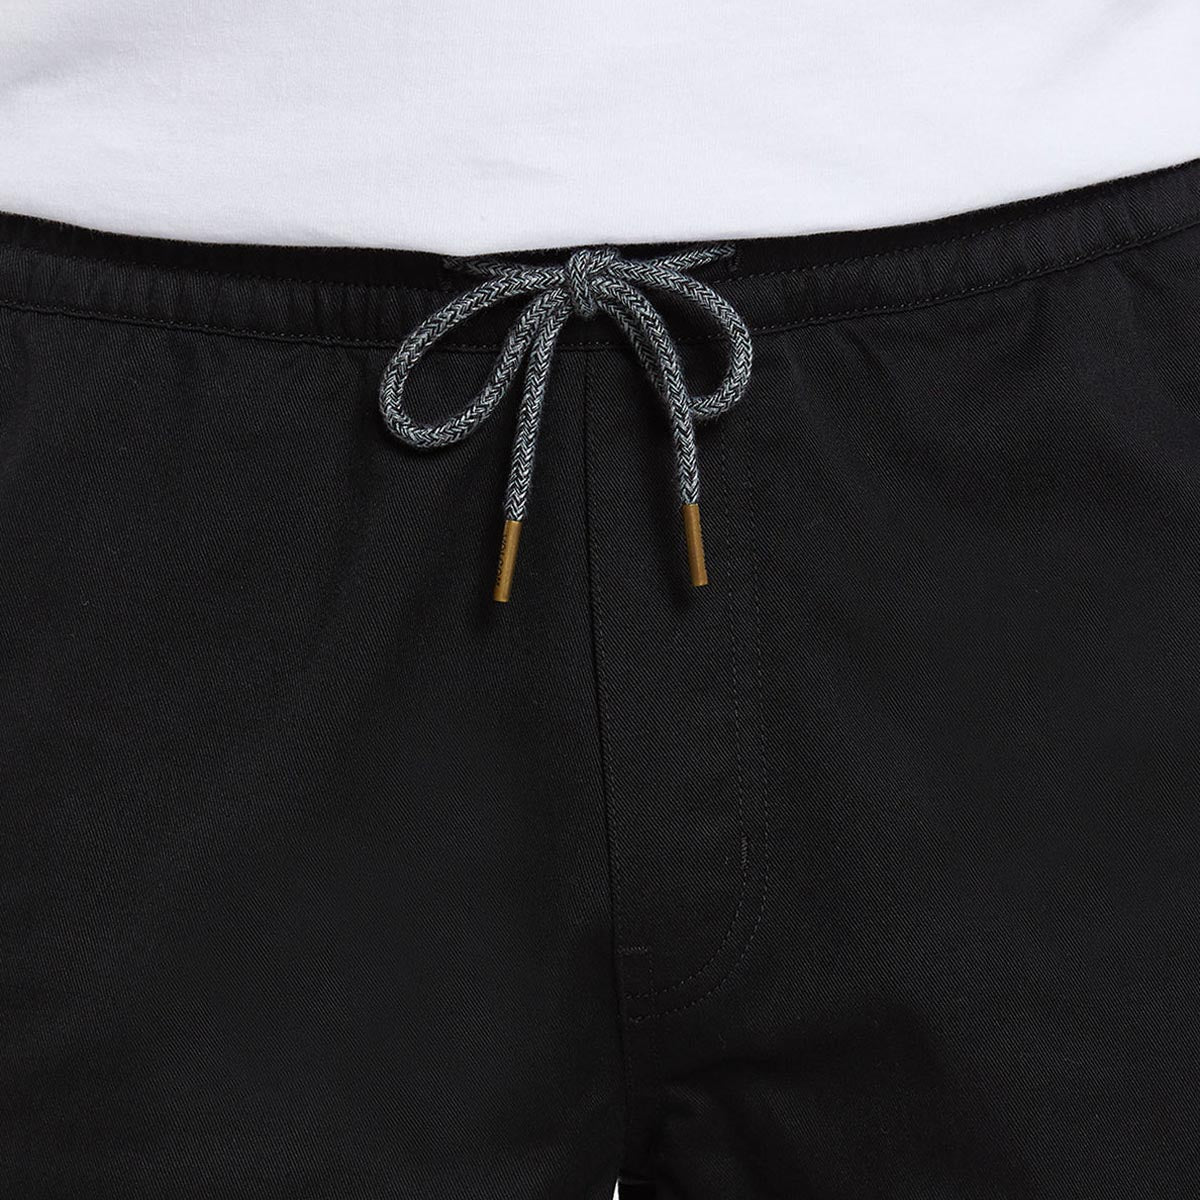 Volcom Frickin Ew 19 Shorts - Black image 4